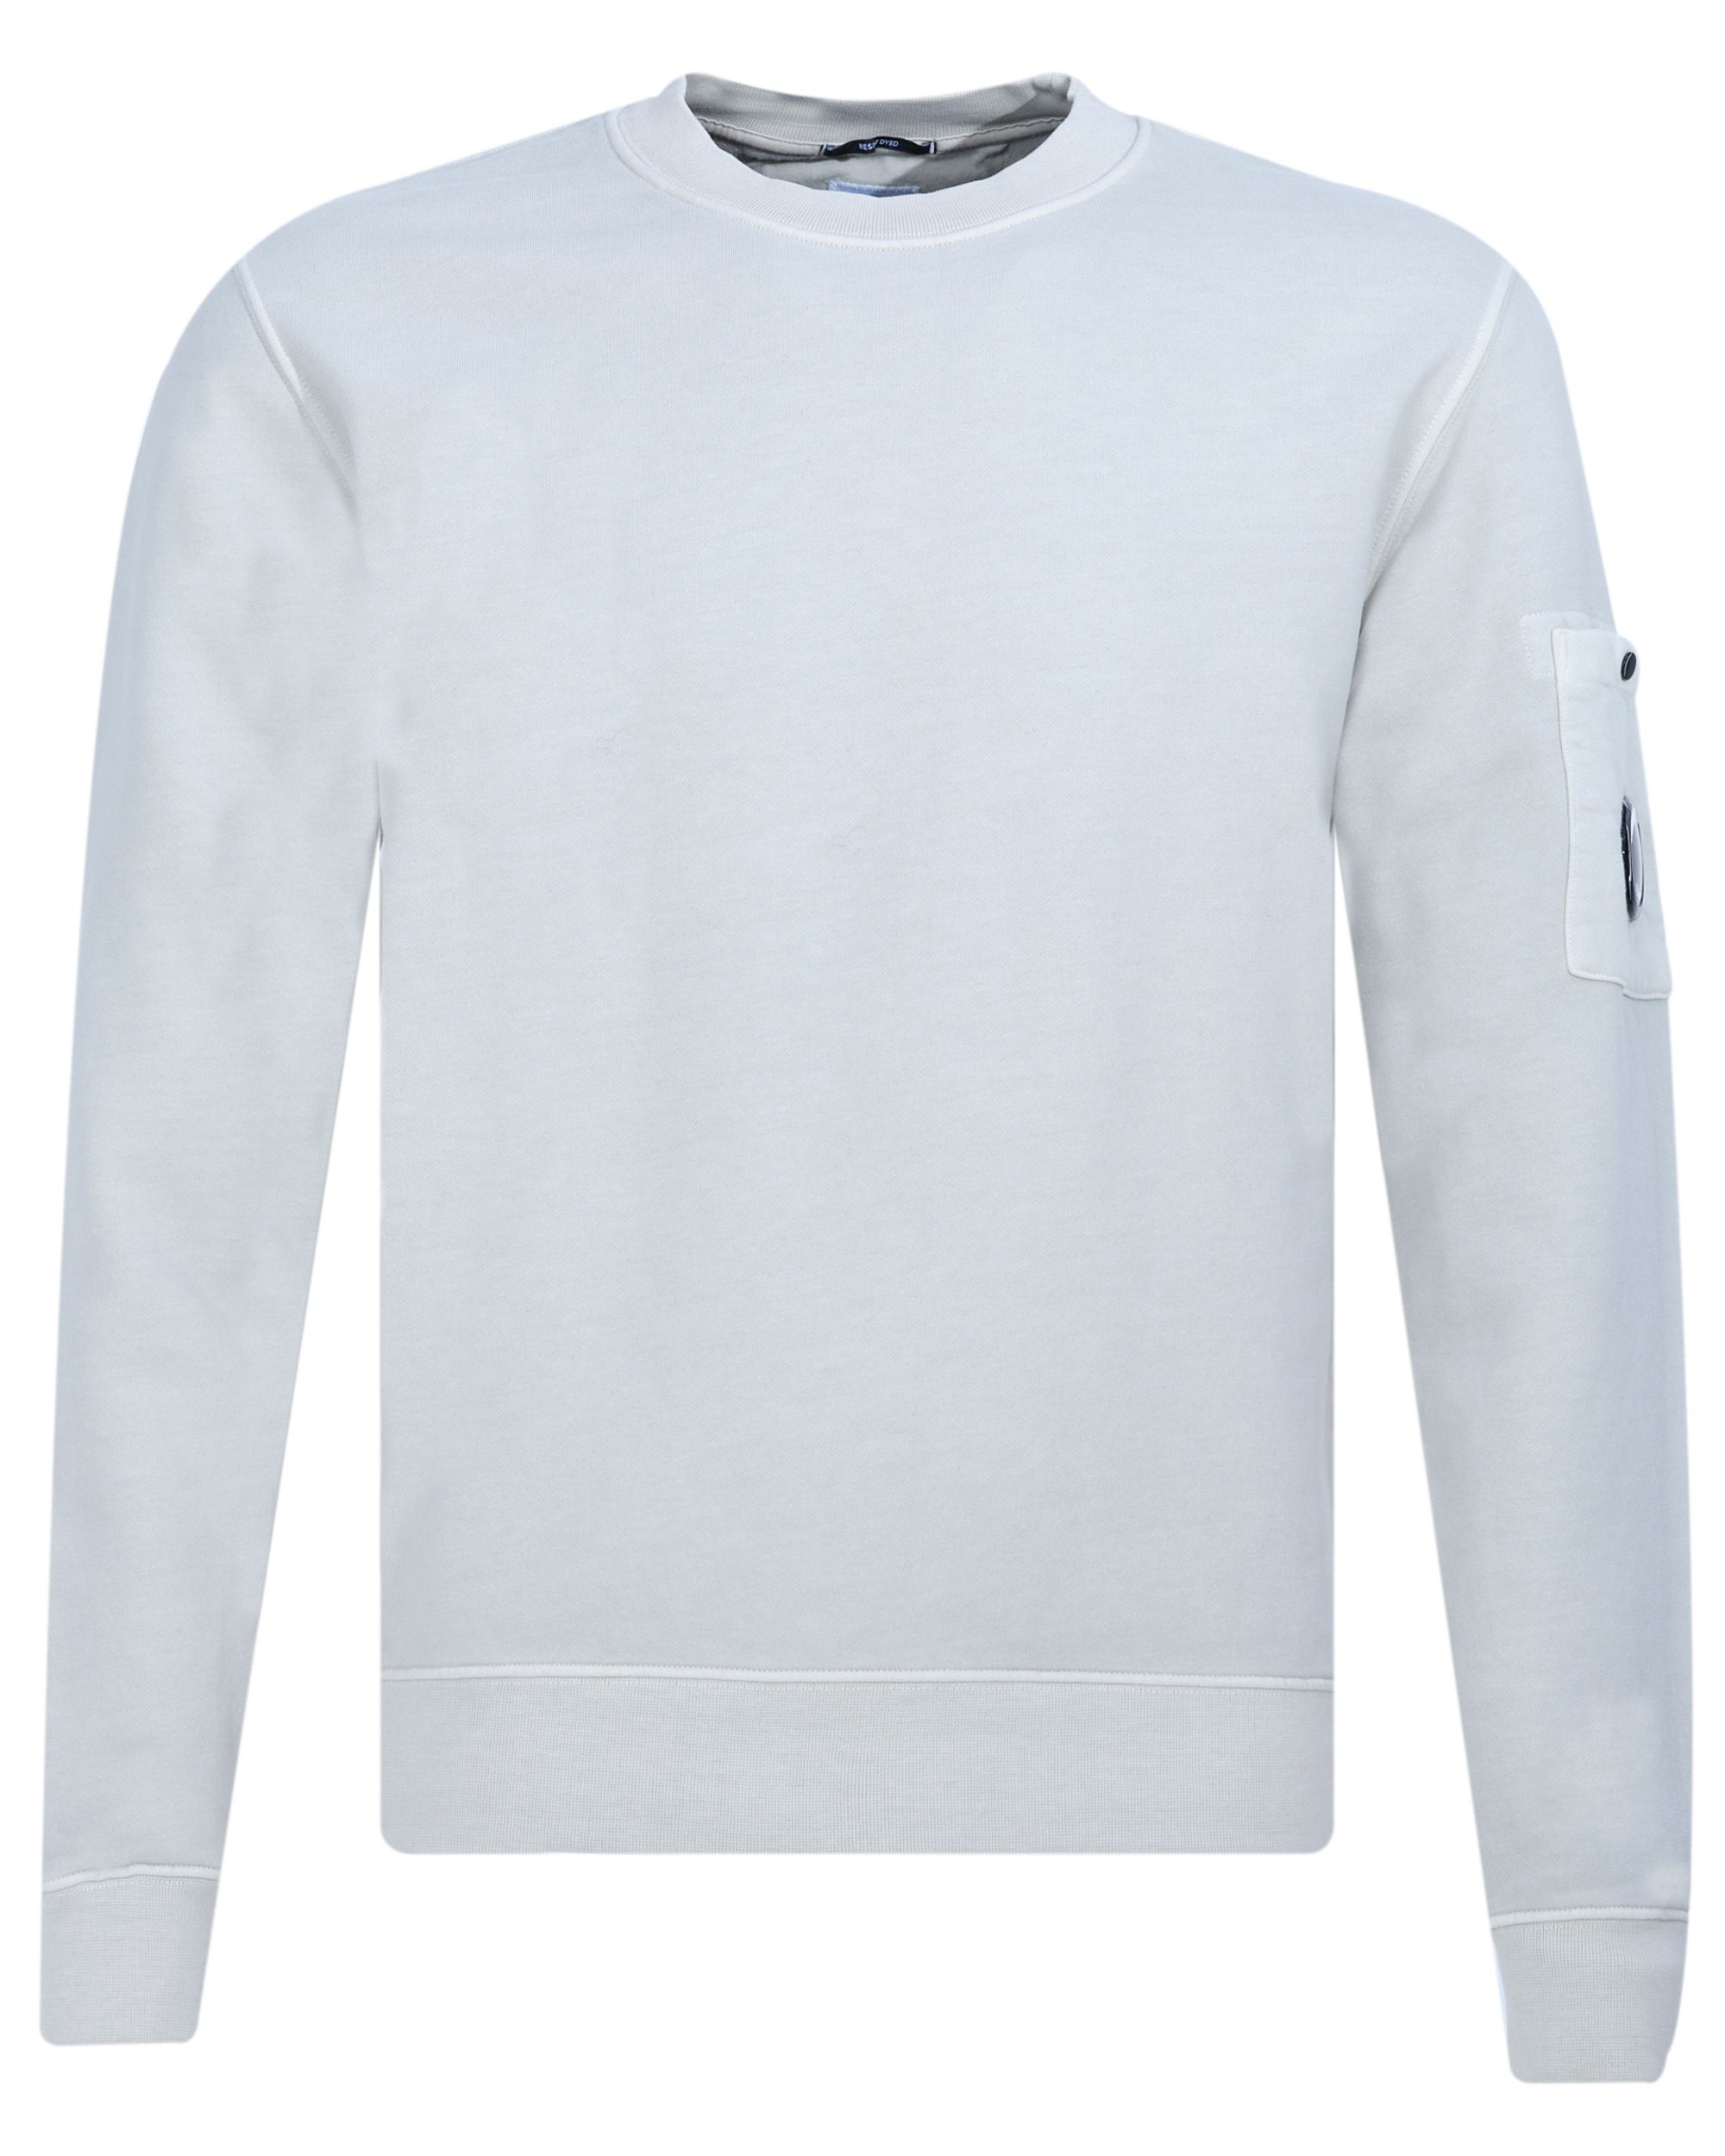 C.P Company Sweater Licht grijs 079365-001-L